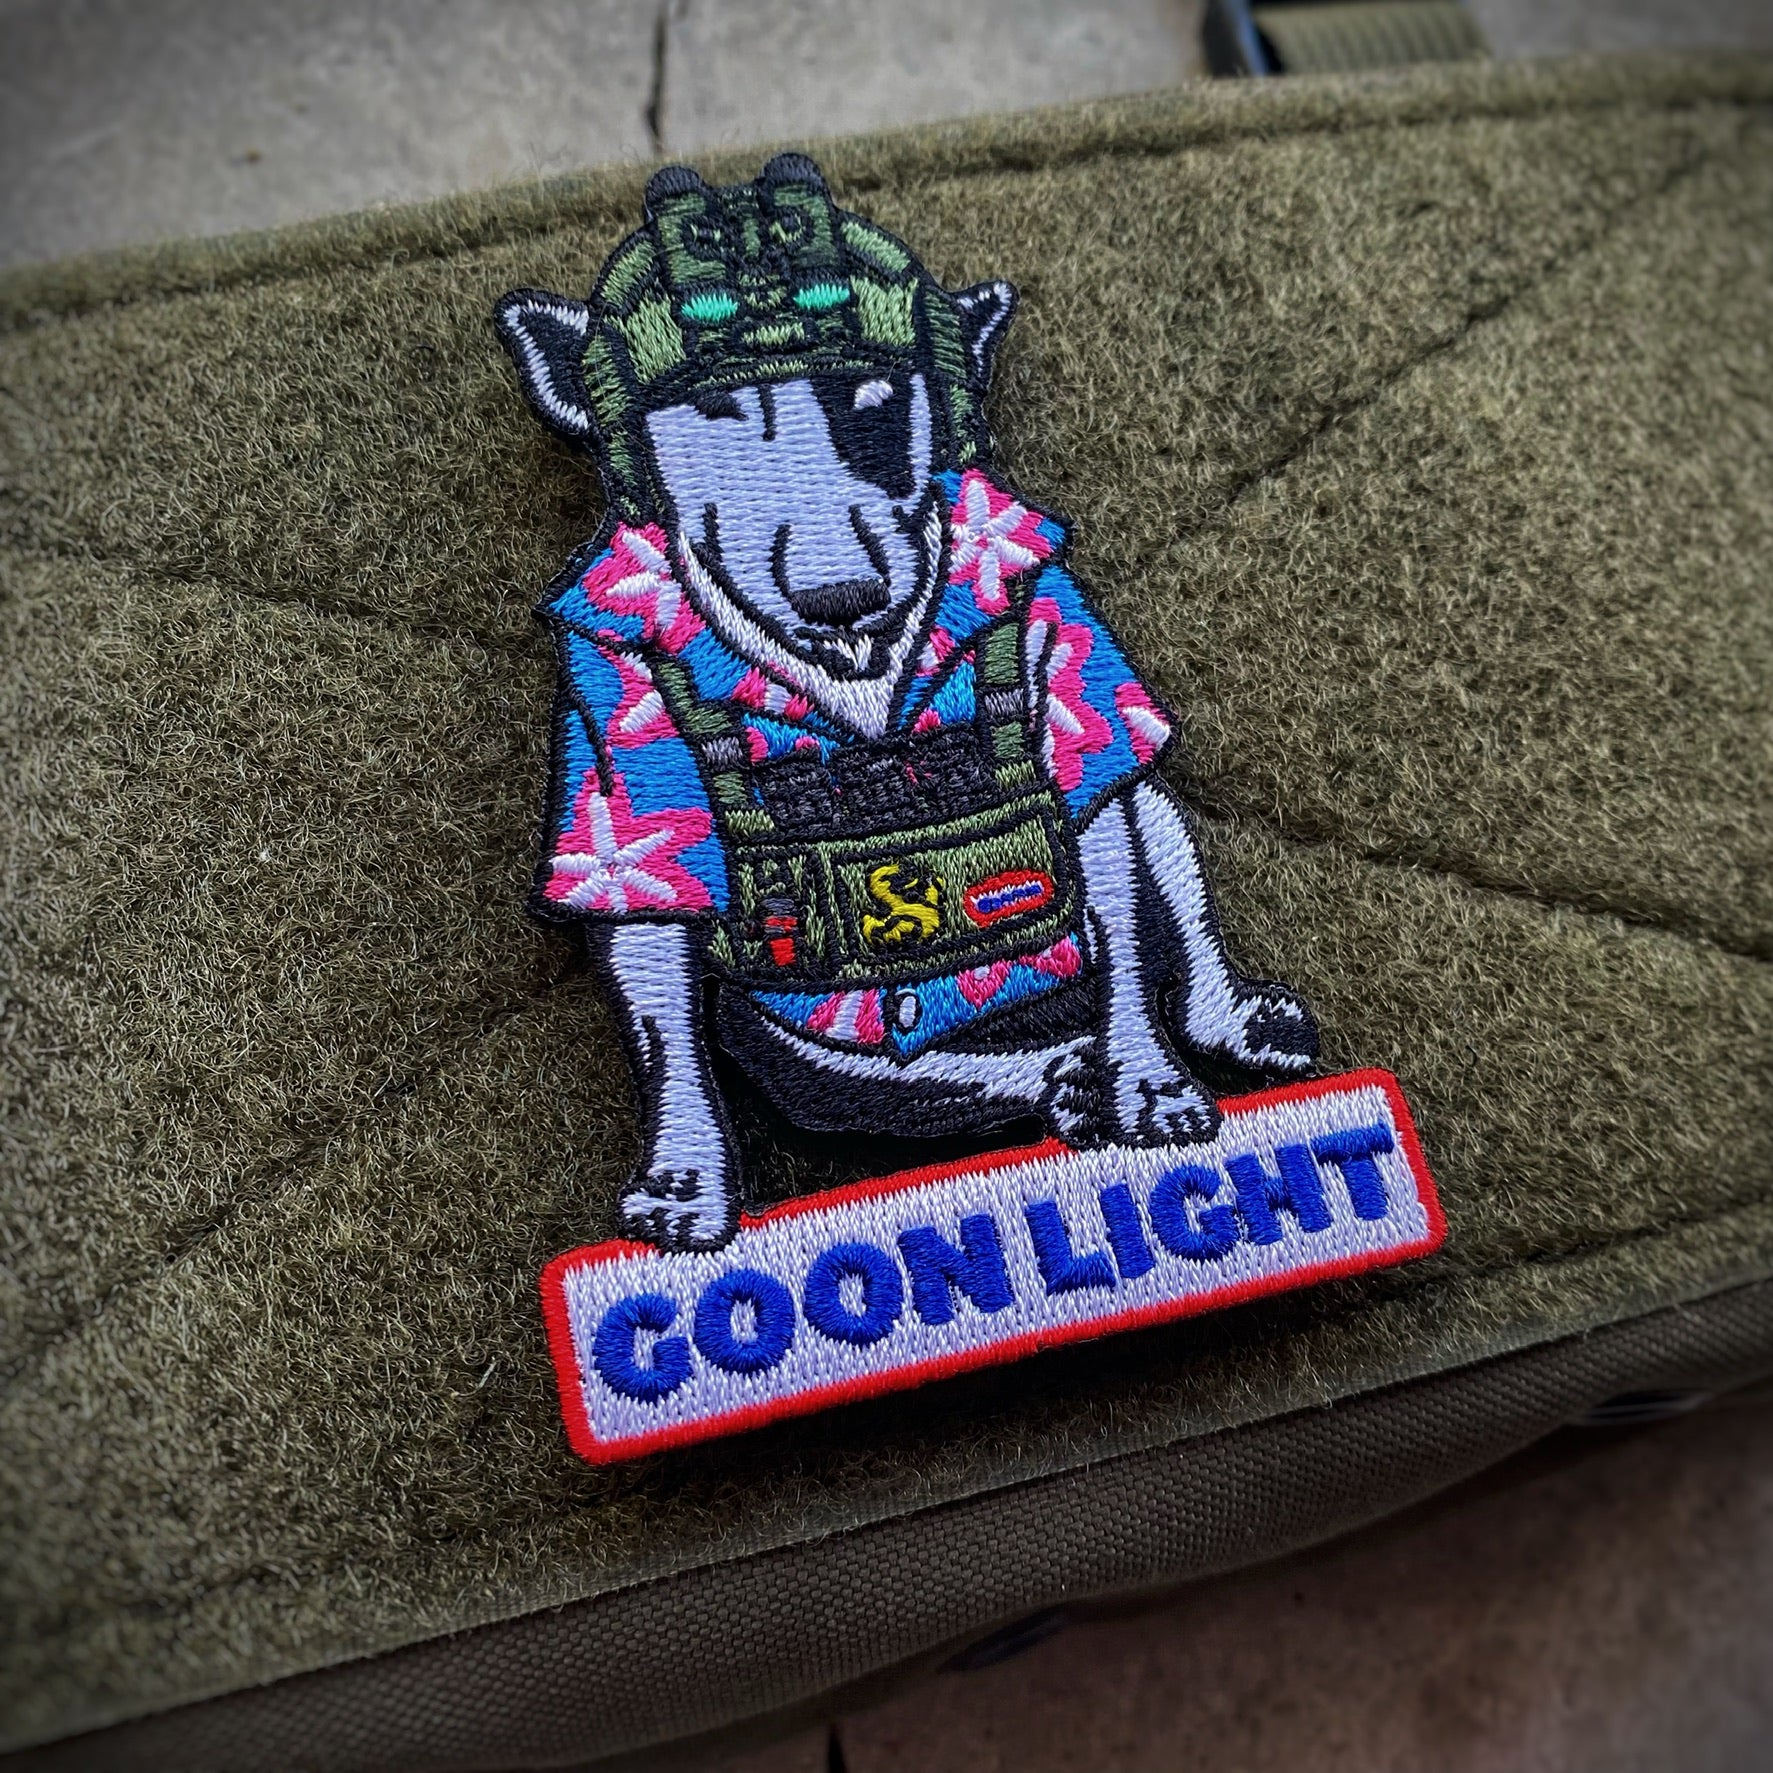 Dangerous Goods® Goon Light “Party Animal” Patch